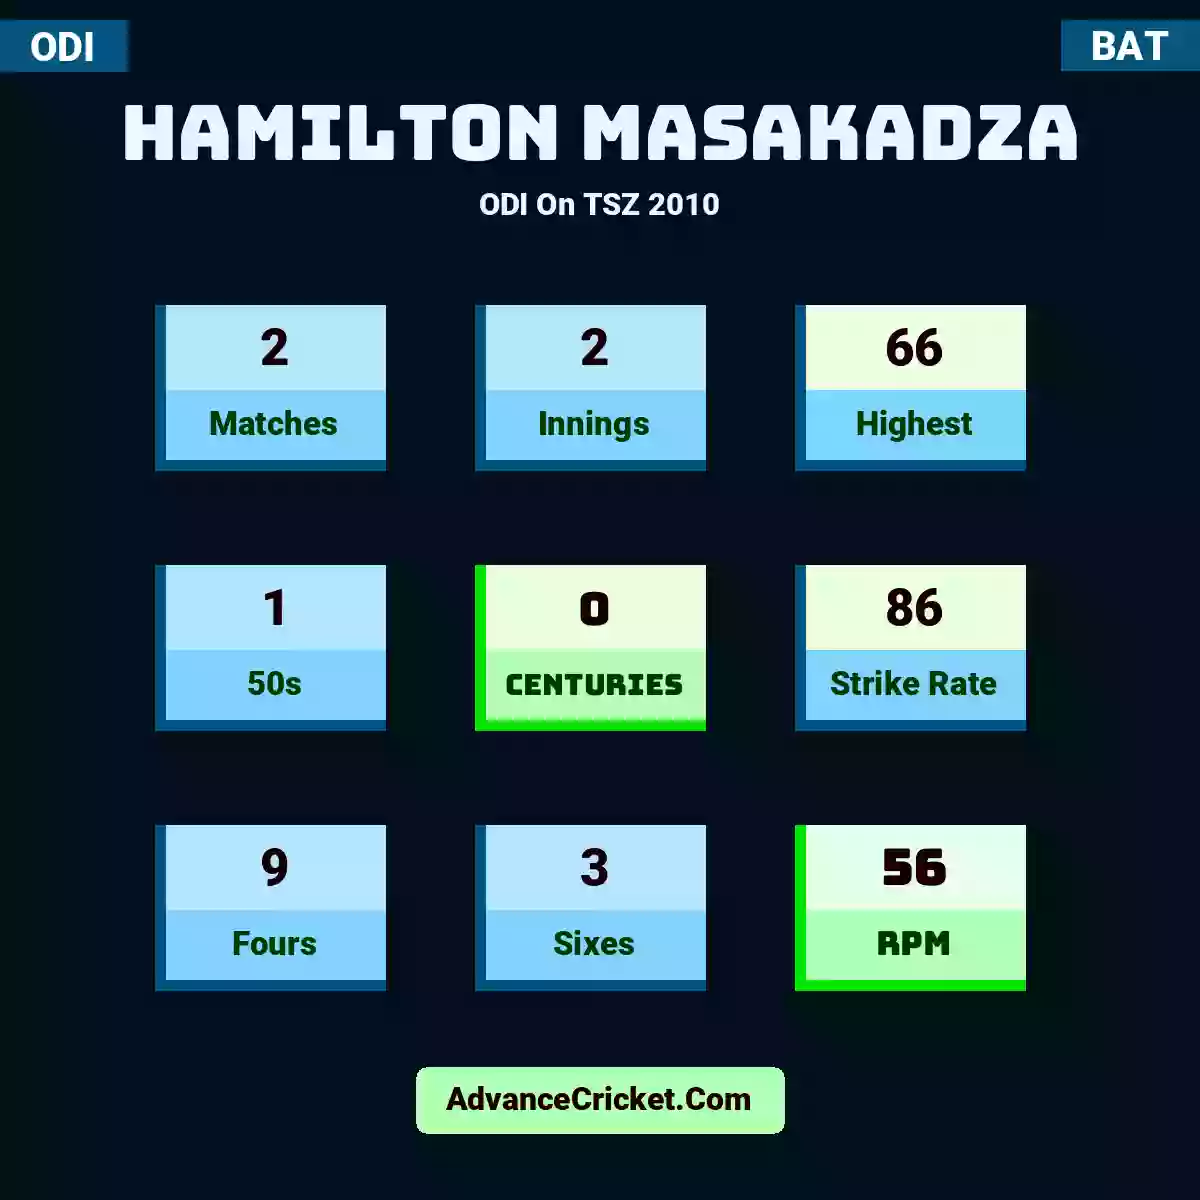 Hamilton Masakadza ODI  On TSZ 2010, Hamilton Masakadza played 2 matches, scored 66 runs as highest, 1 half-centuries, and 0 centuries, with a strike rate of 86. H.Masakadza hit 9 fours and 3 sixes, with an RPM of 56.